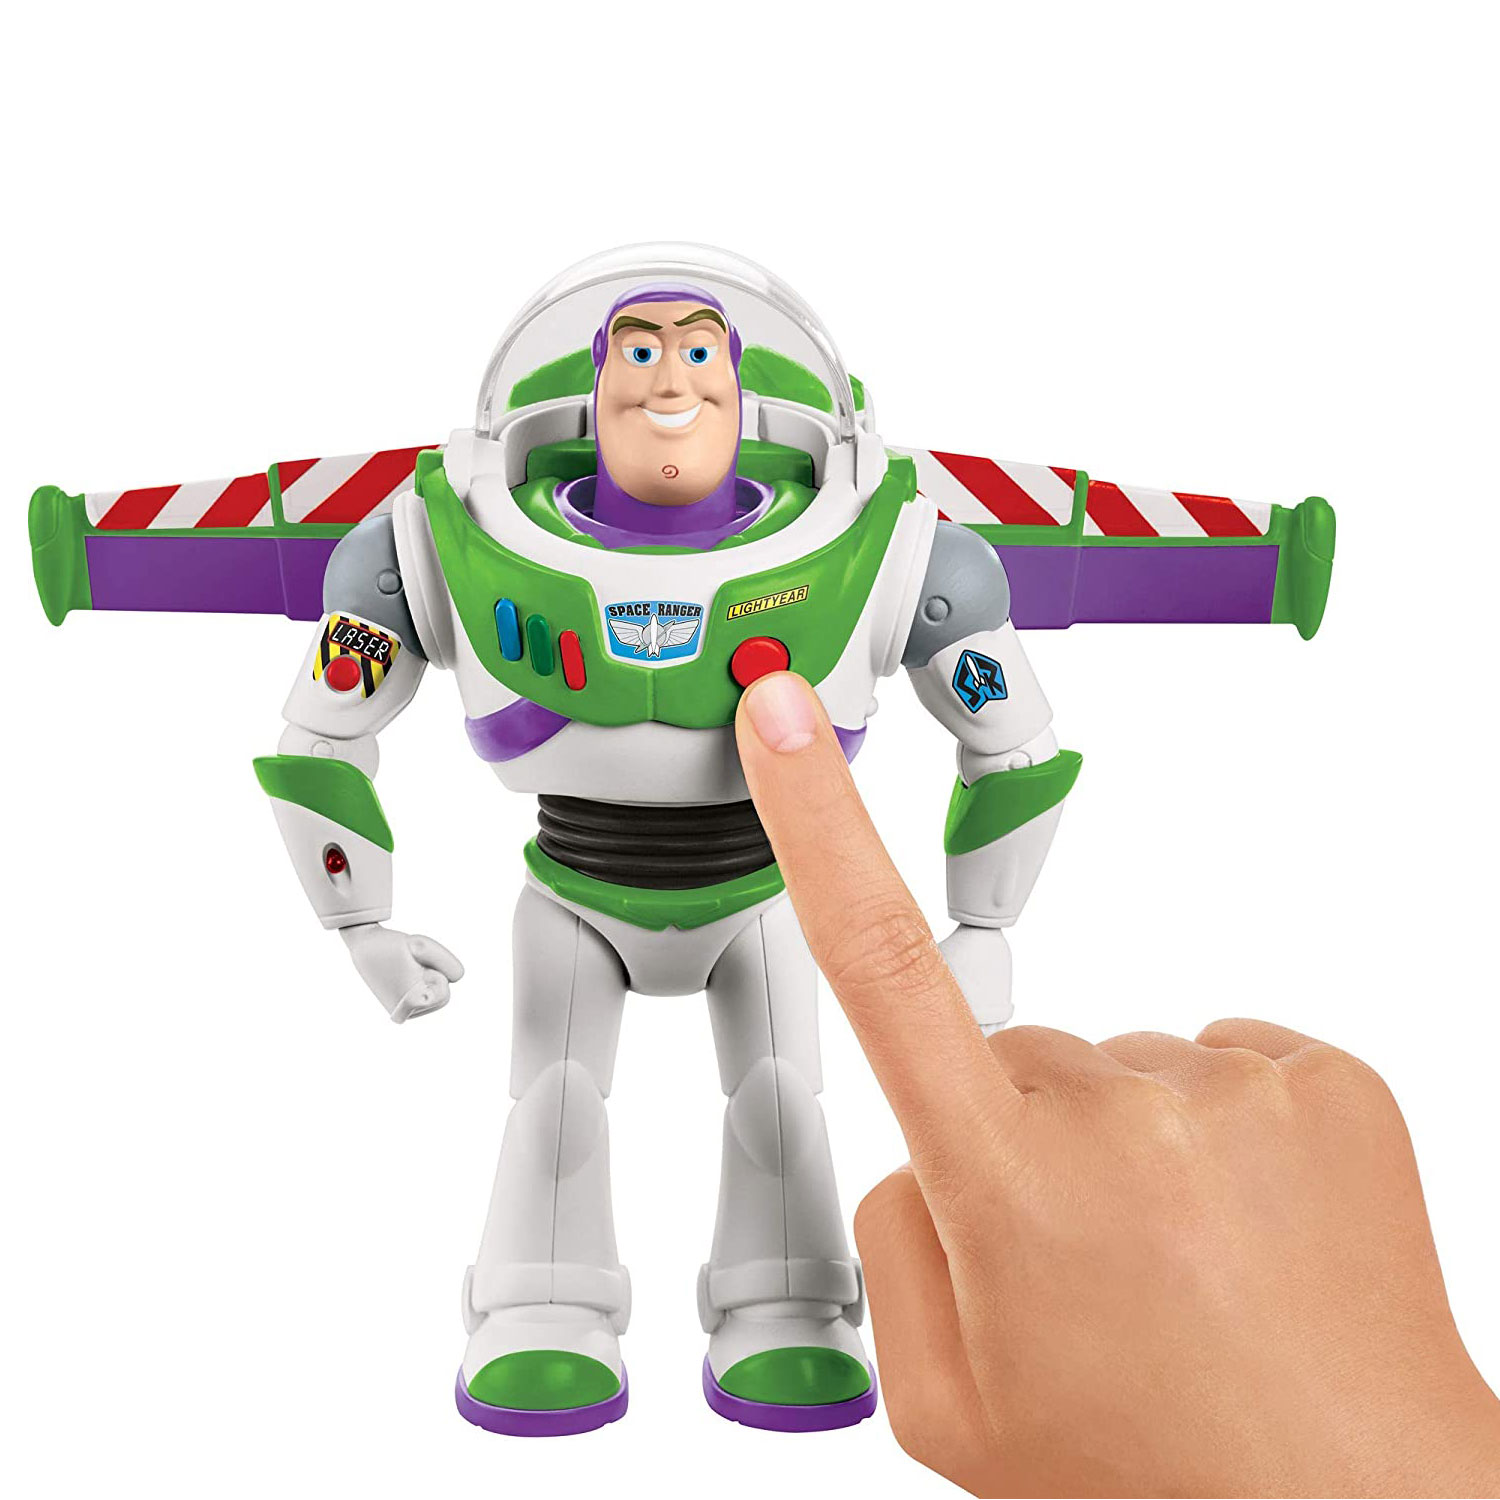 Disney Pixar Toy Story Ultimate Walking Buzz Lightyear - image 3 of 8